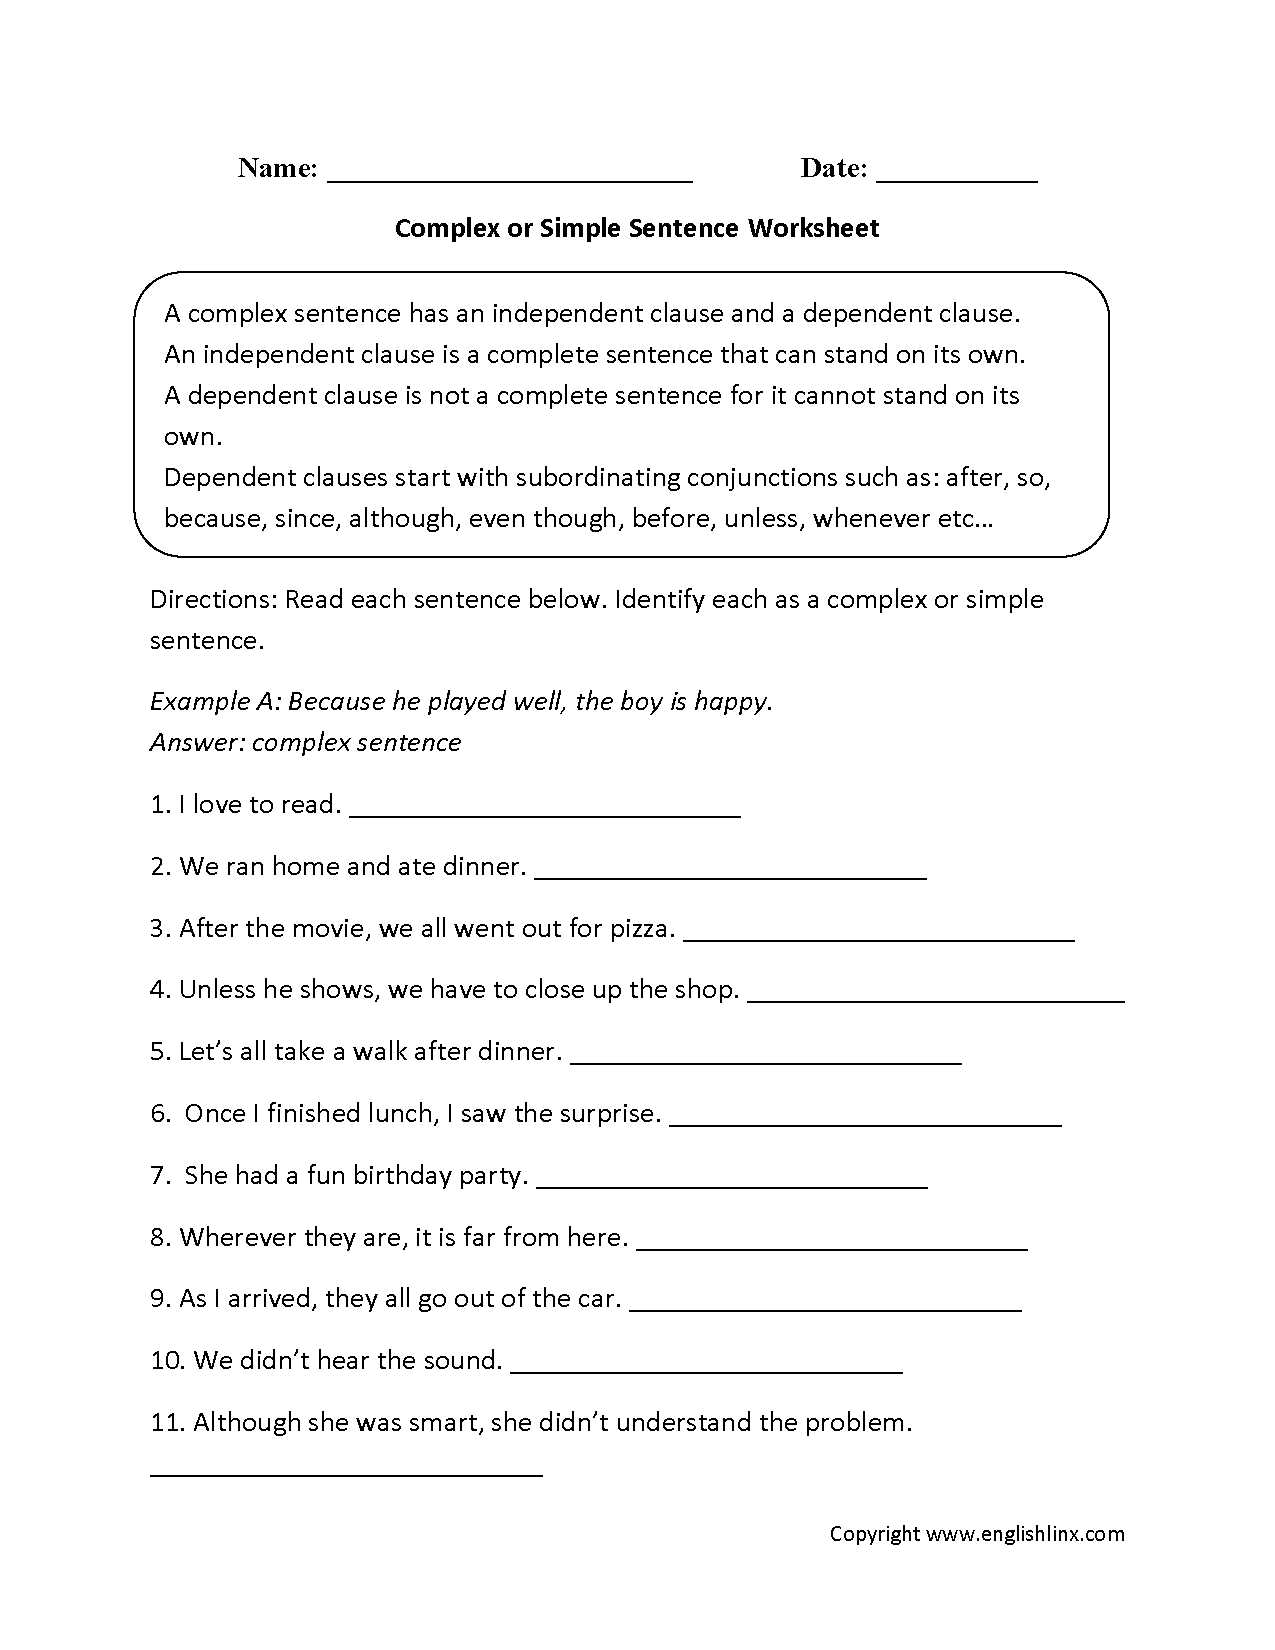 English Worksheets for Grade 1 Along with Plex or Simple Sentences Worksheet Mona Pinterest